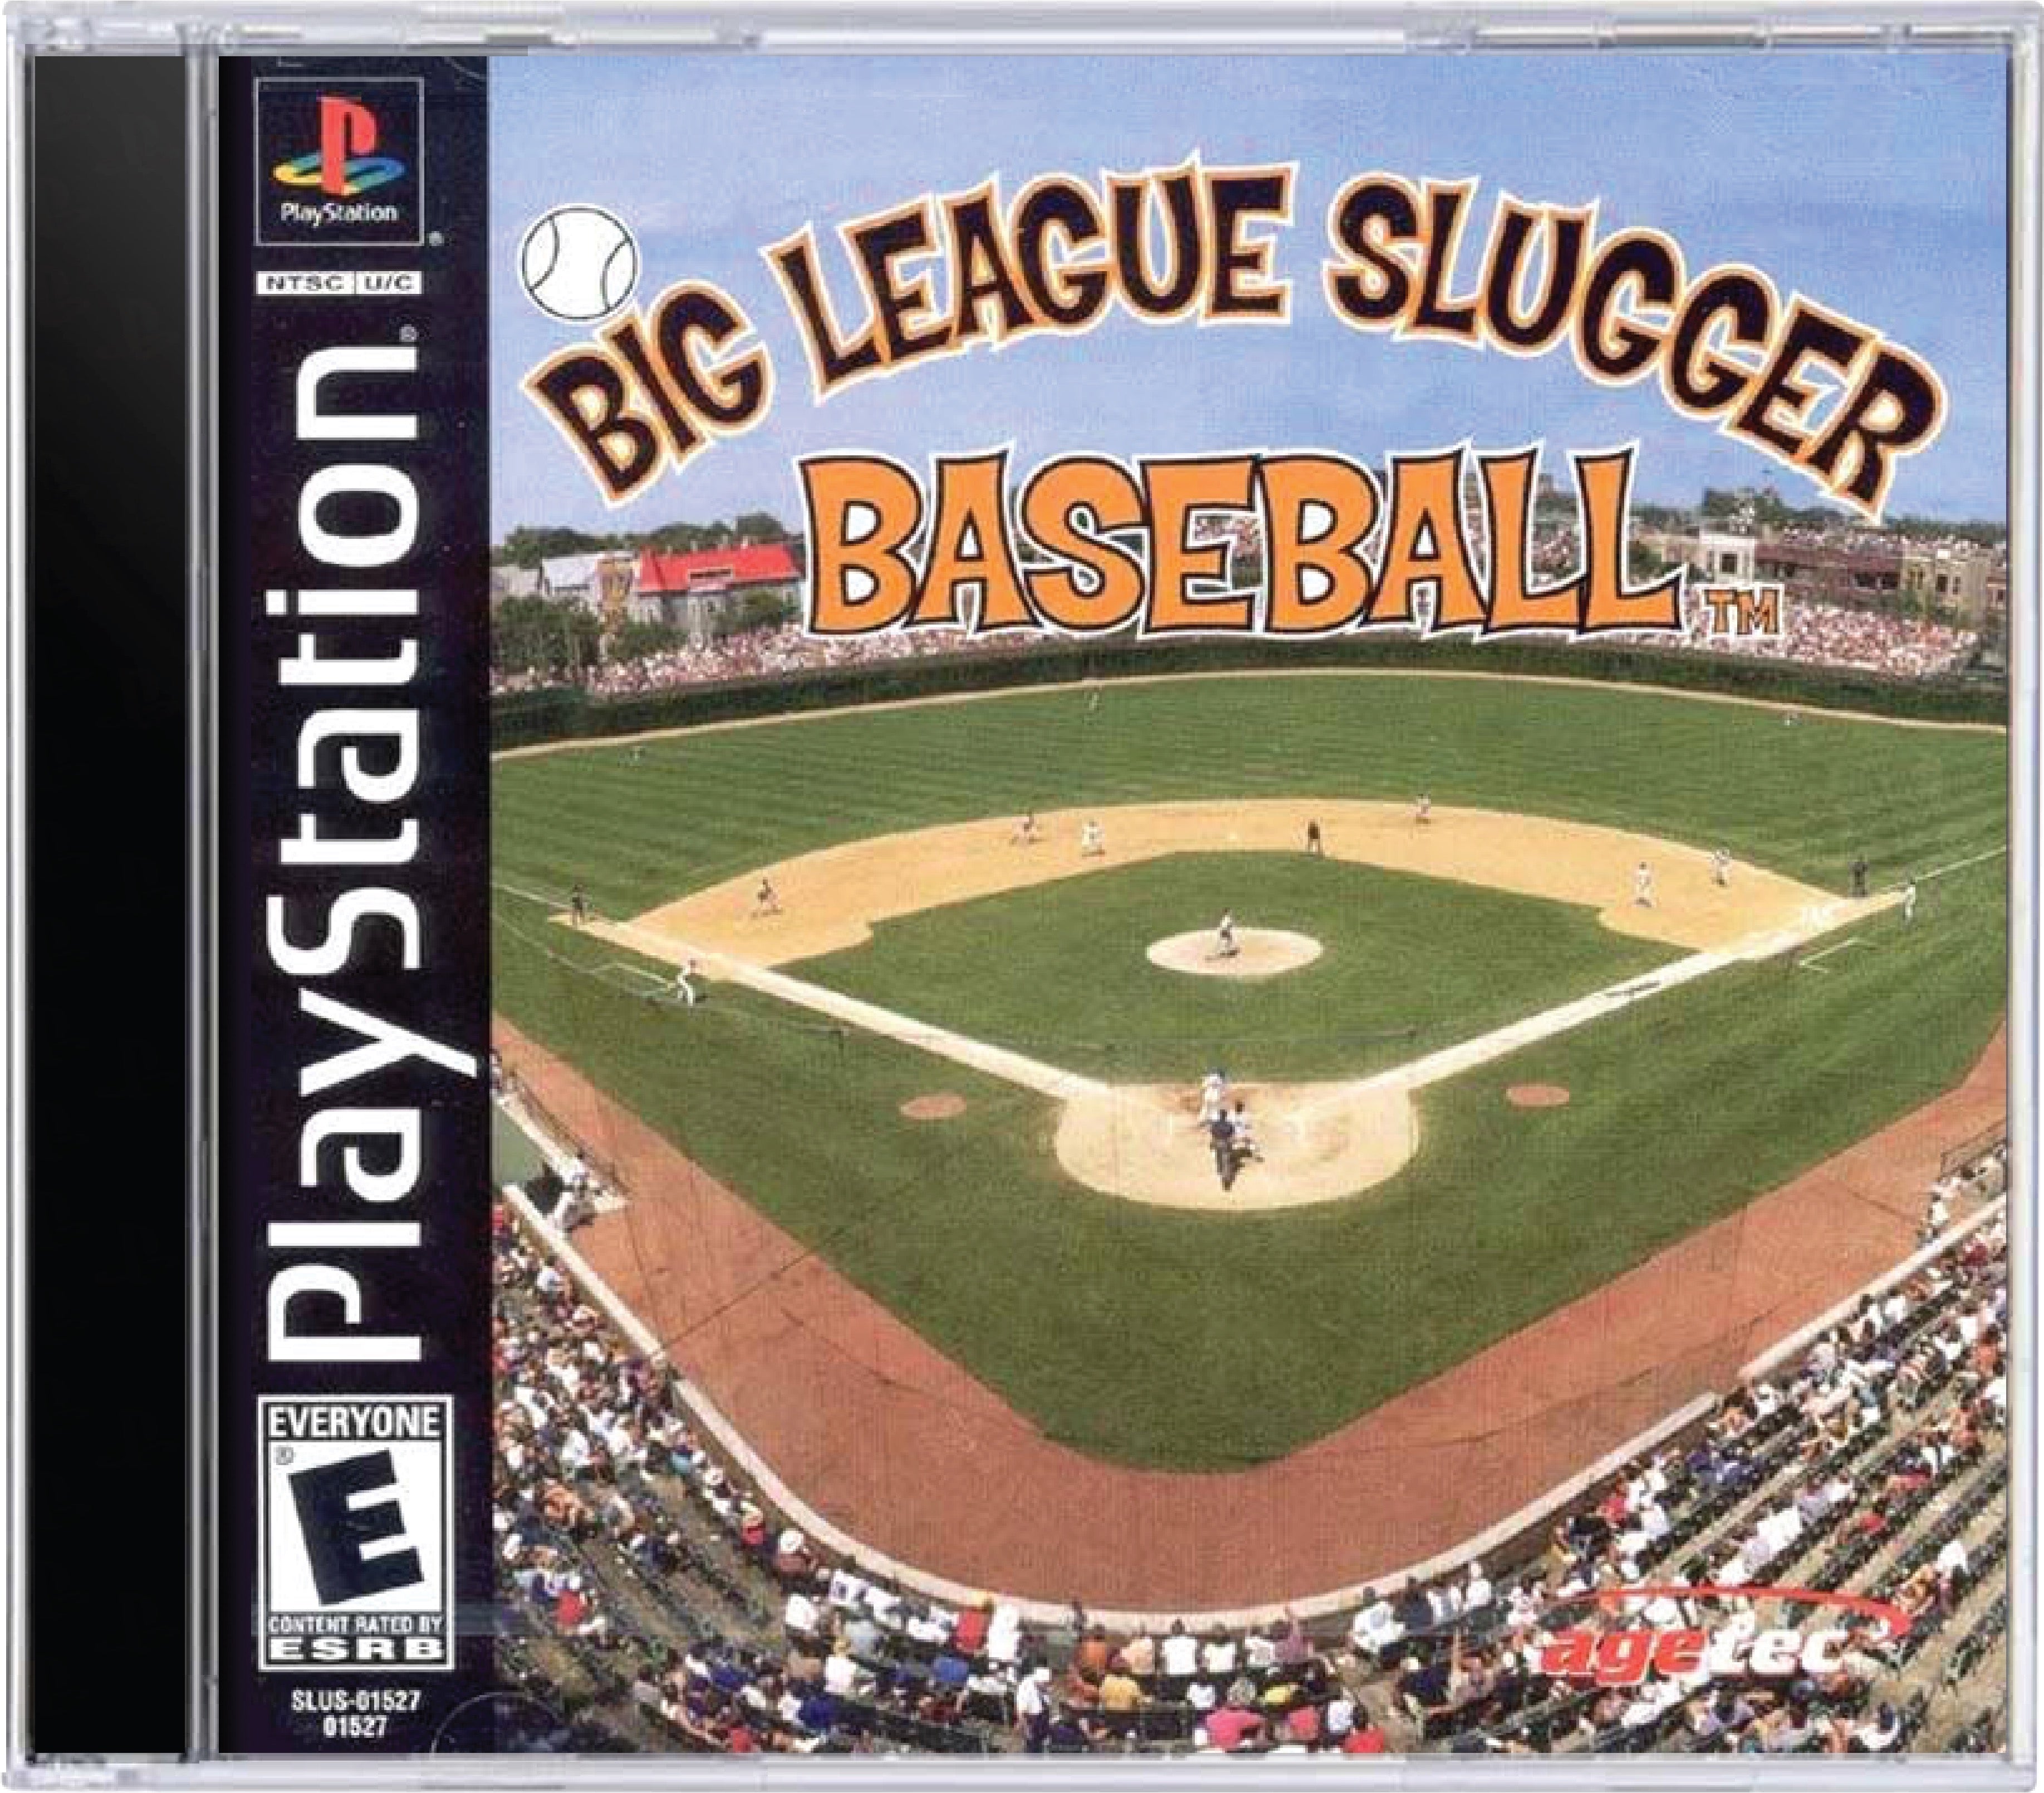 Big League Slugger Baseball Cover Art and Product Photo